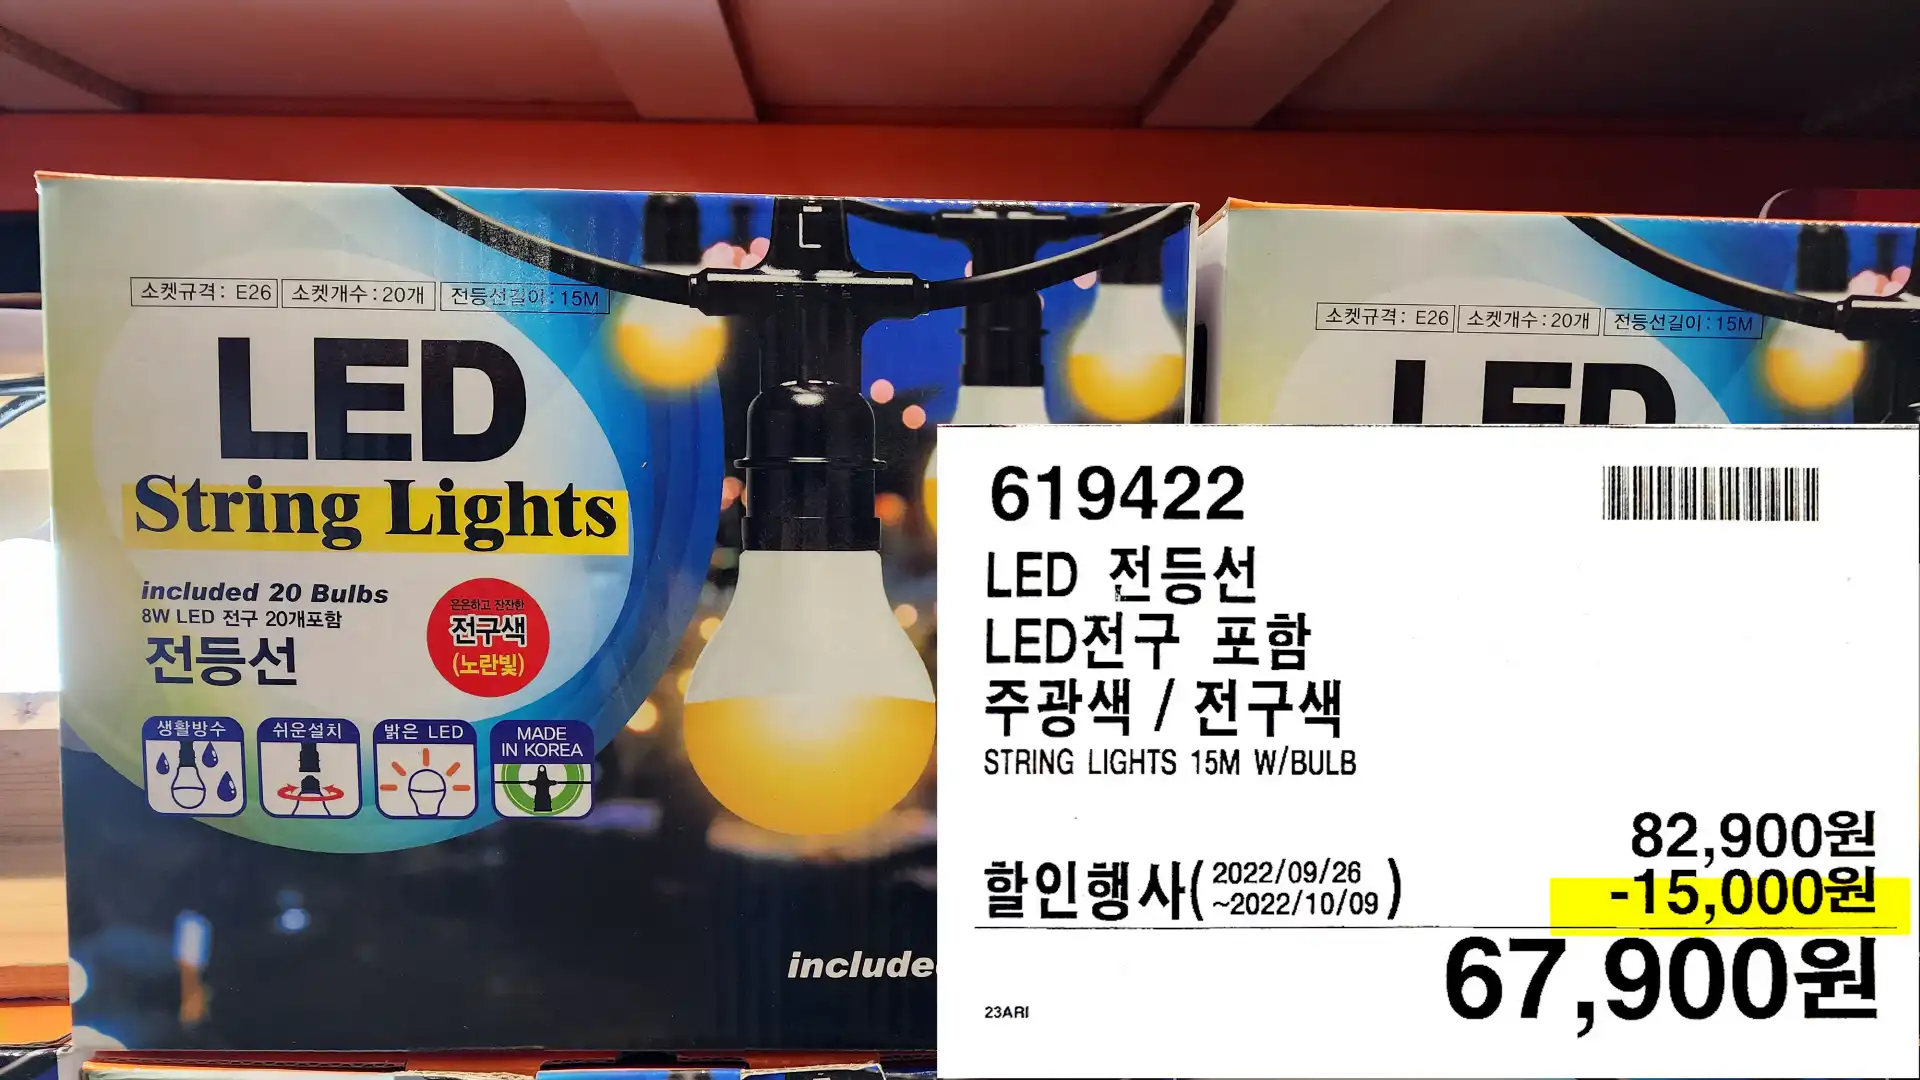 LED 전등선
LED전구 포함
주광색 / 전구색
STRING LIGHTS 15M W/BULB
67&#44;900원